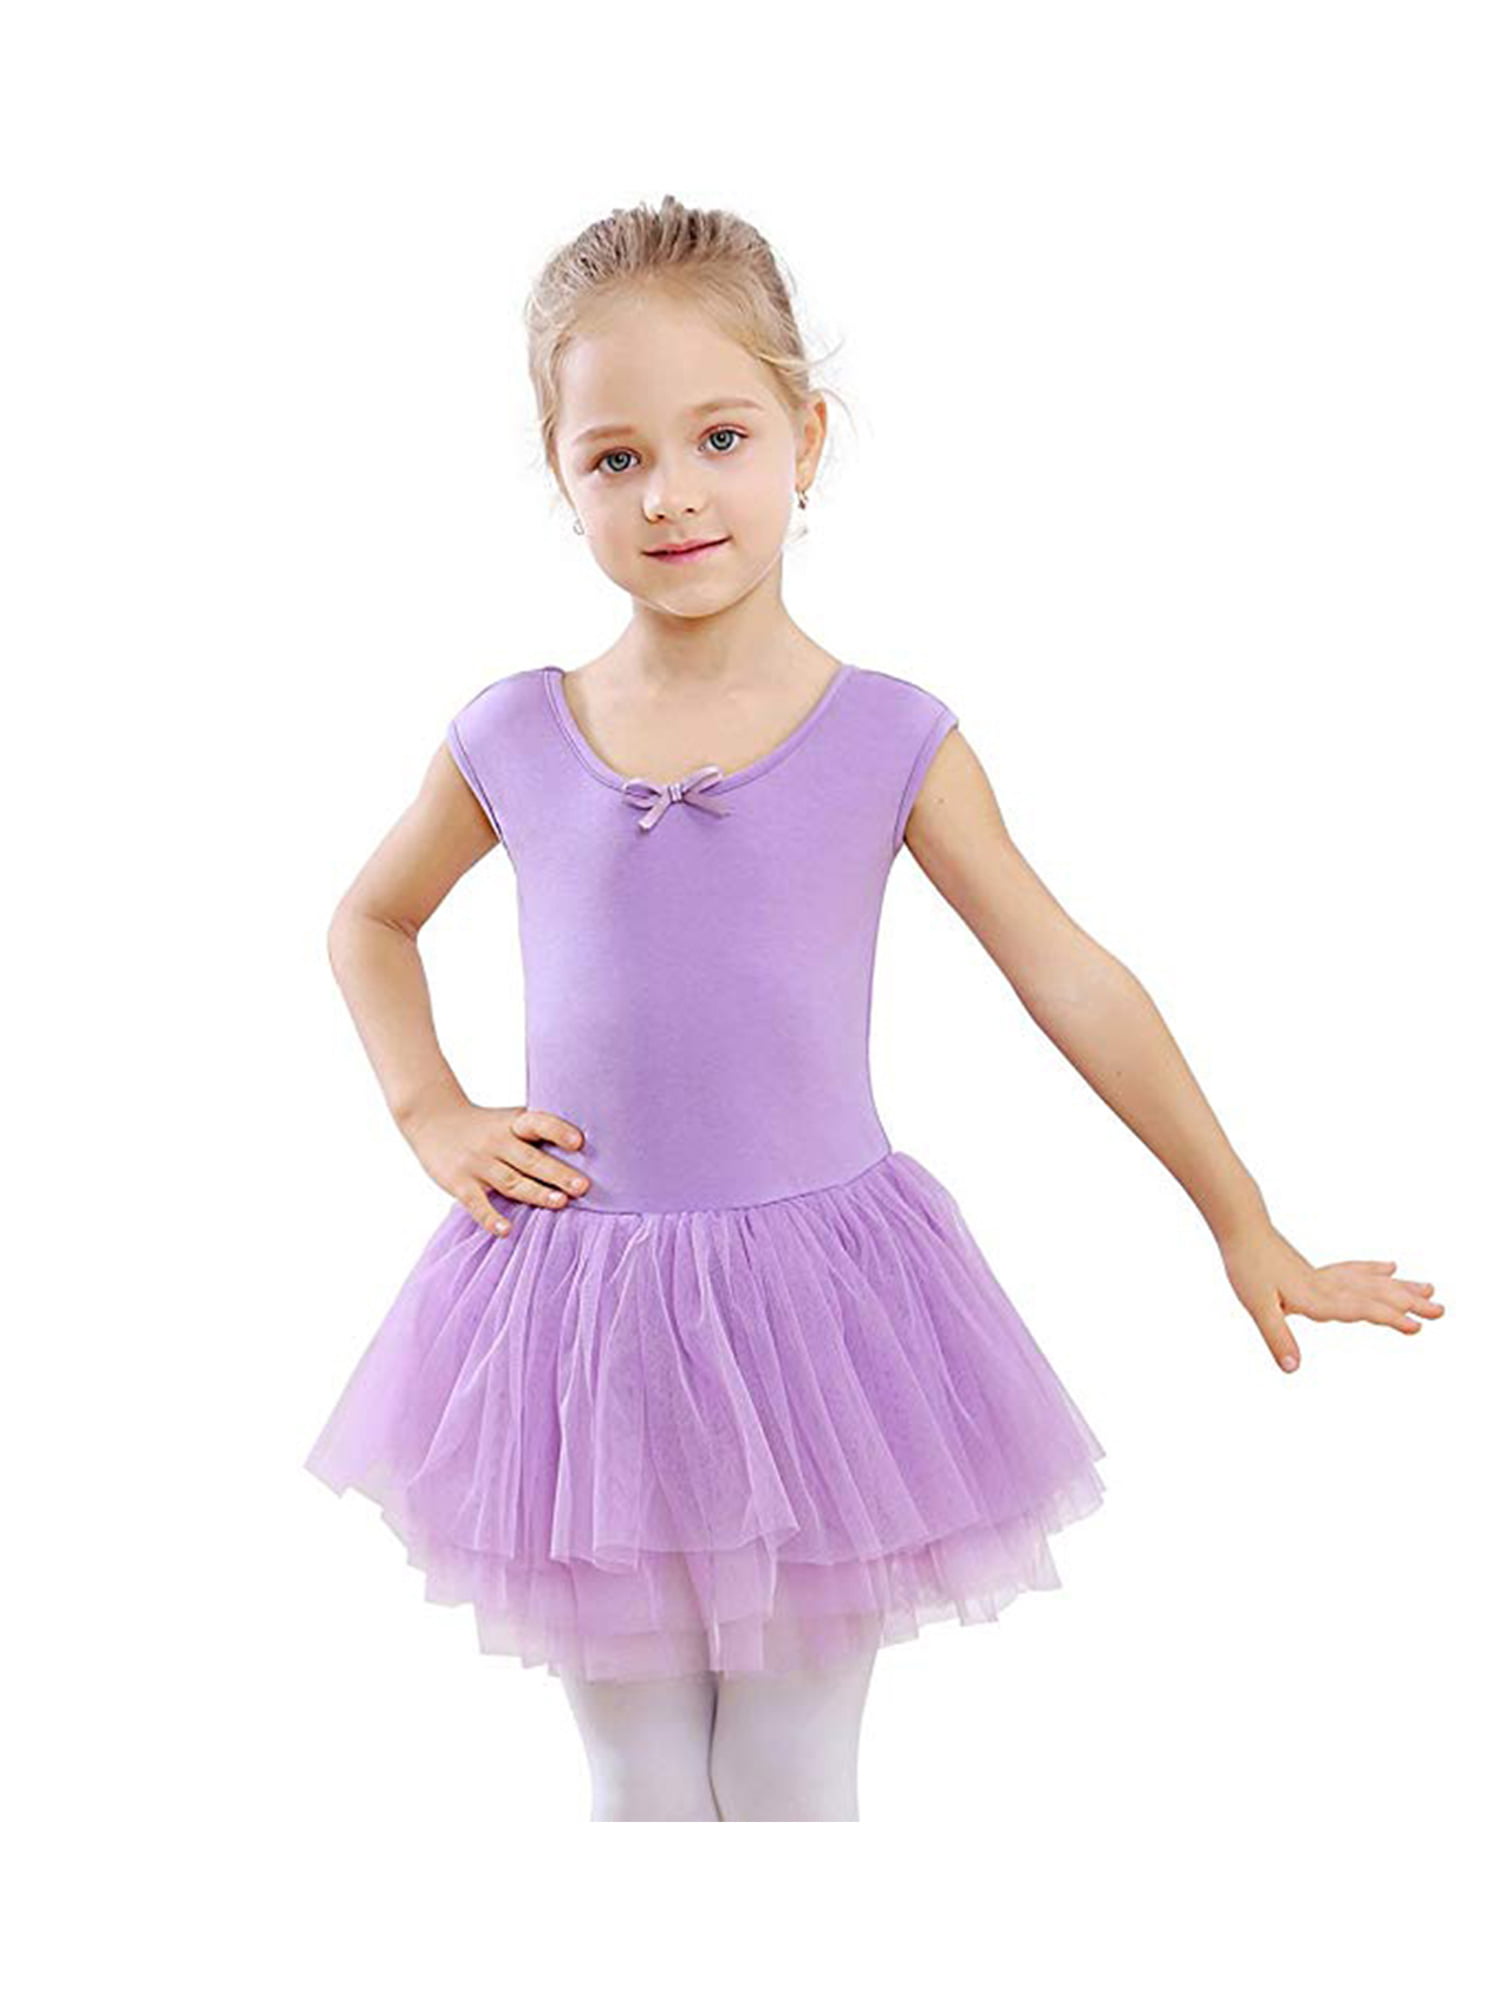 NWT Girl's Tutu Dance Ballet Cotton Skirts Dresses Leotards Short Sleeves 1T-5T 